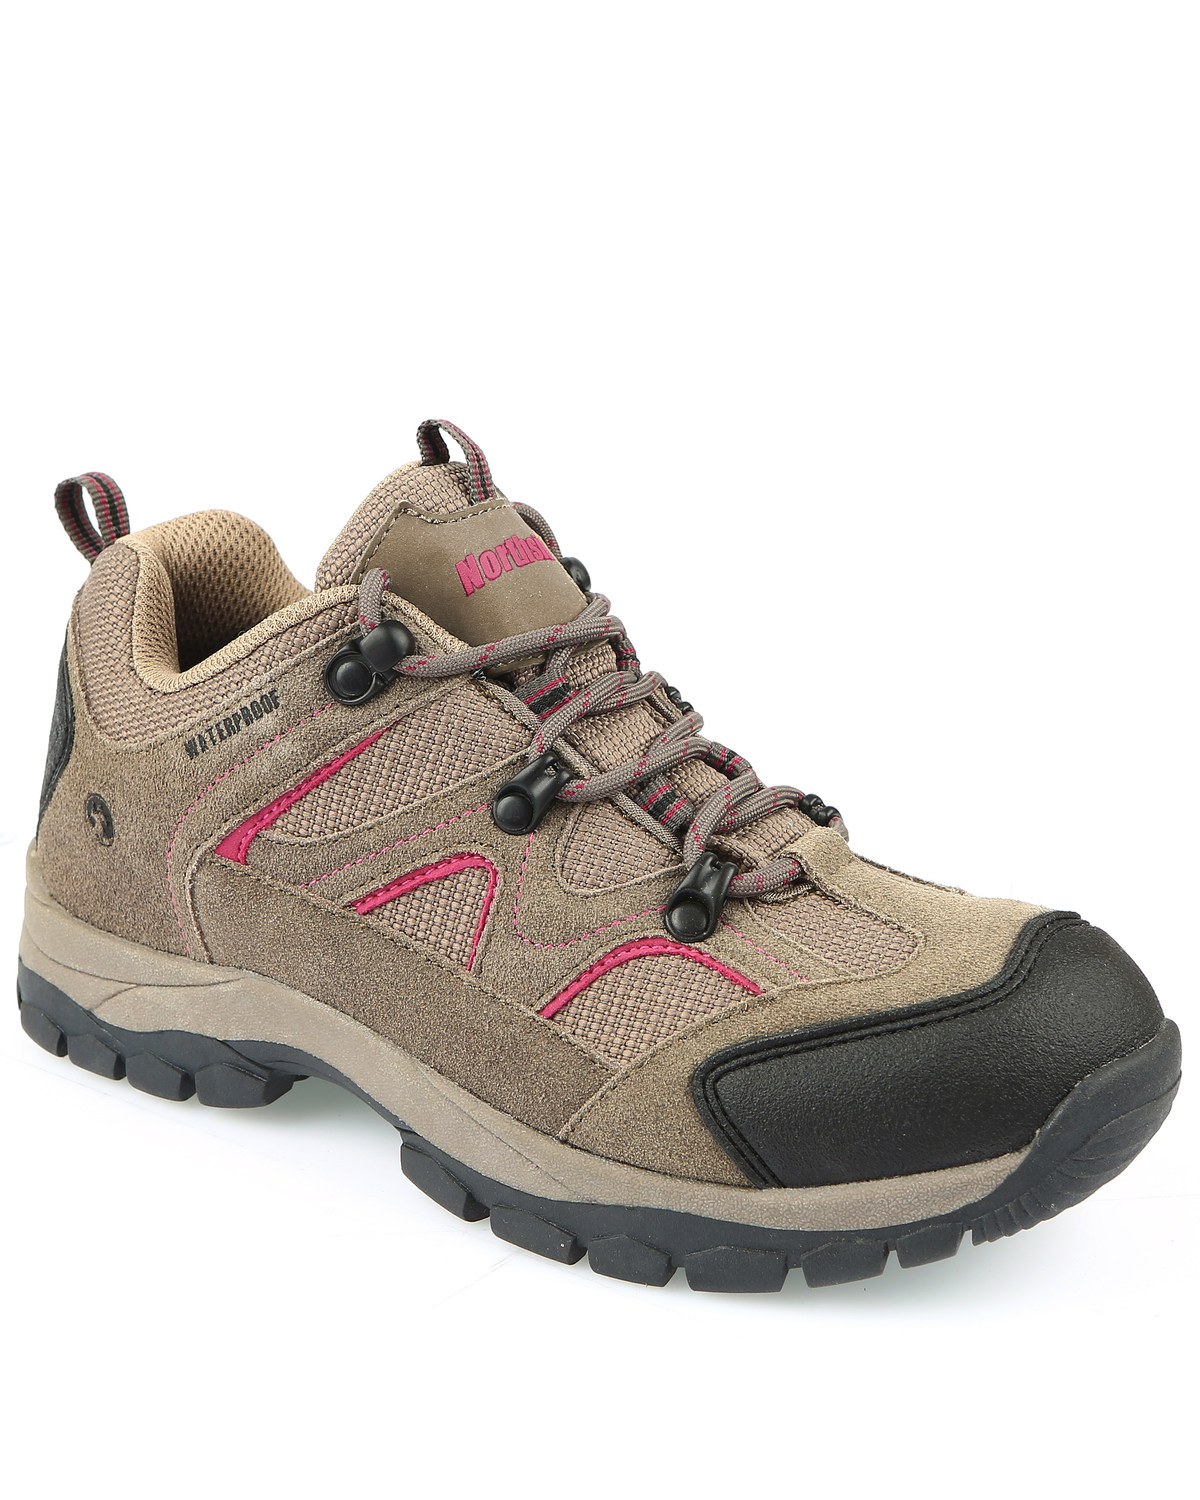 Northside Women's Snohomish Waterproof Hiking Shoes - Soft Toe